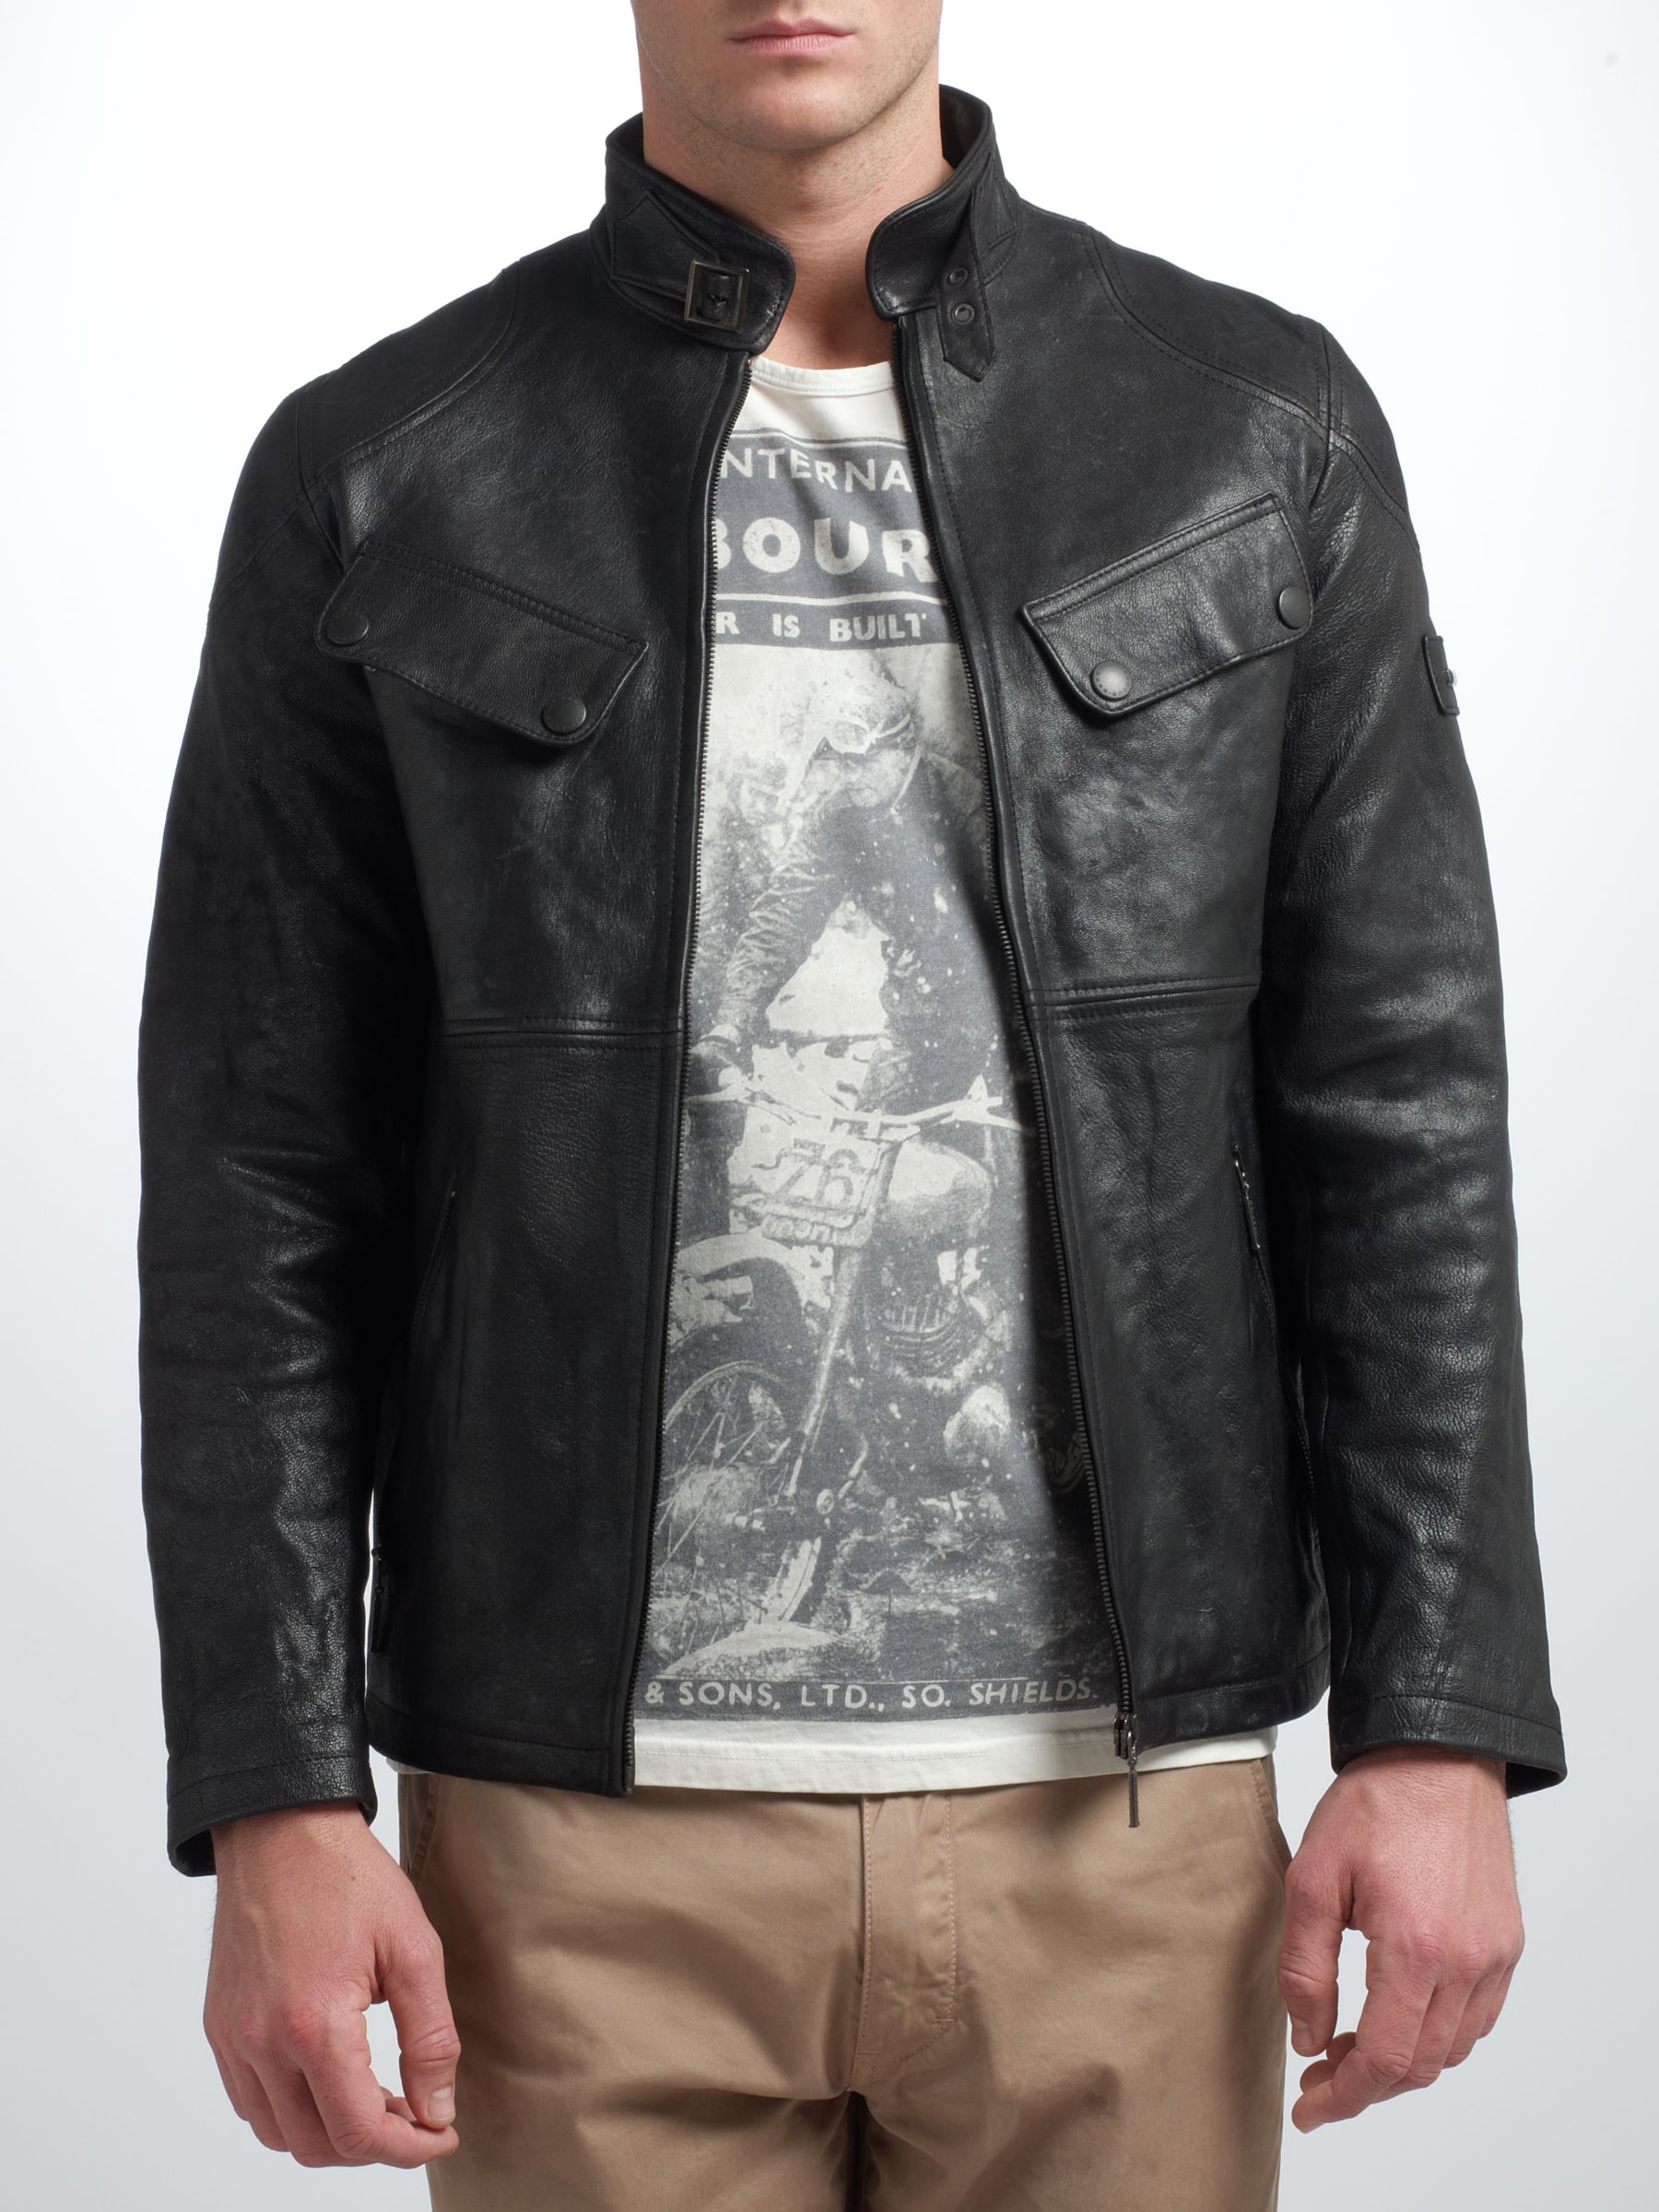 barbour international leather jacket